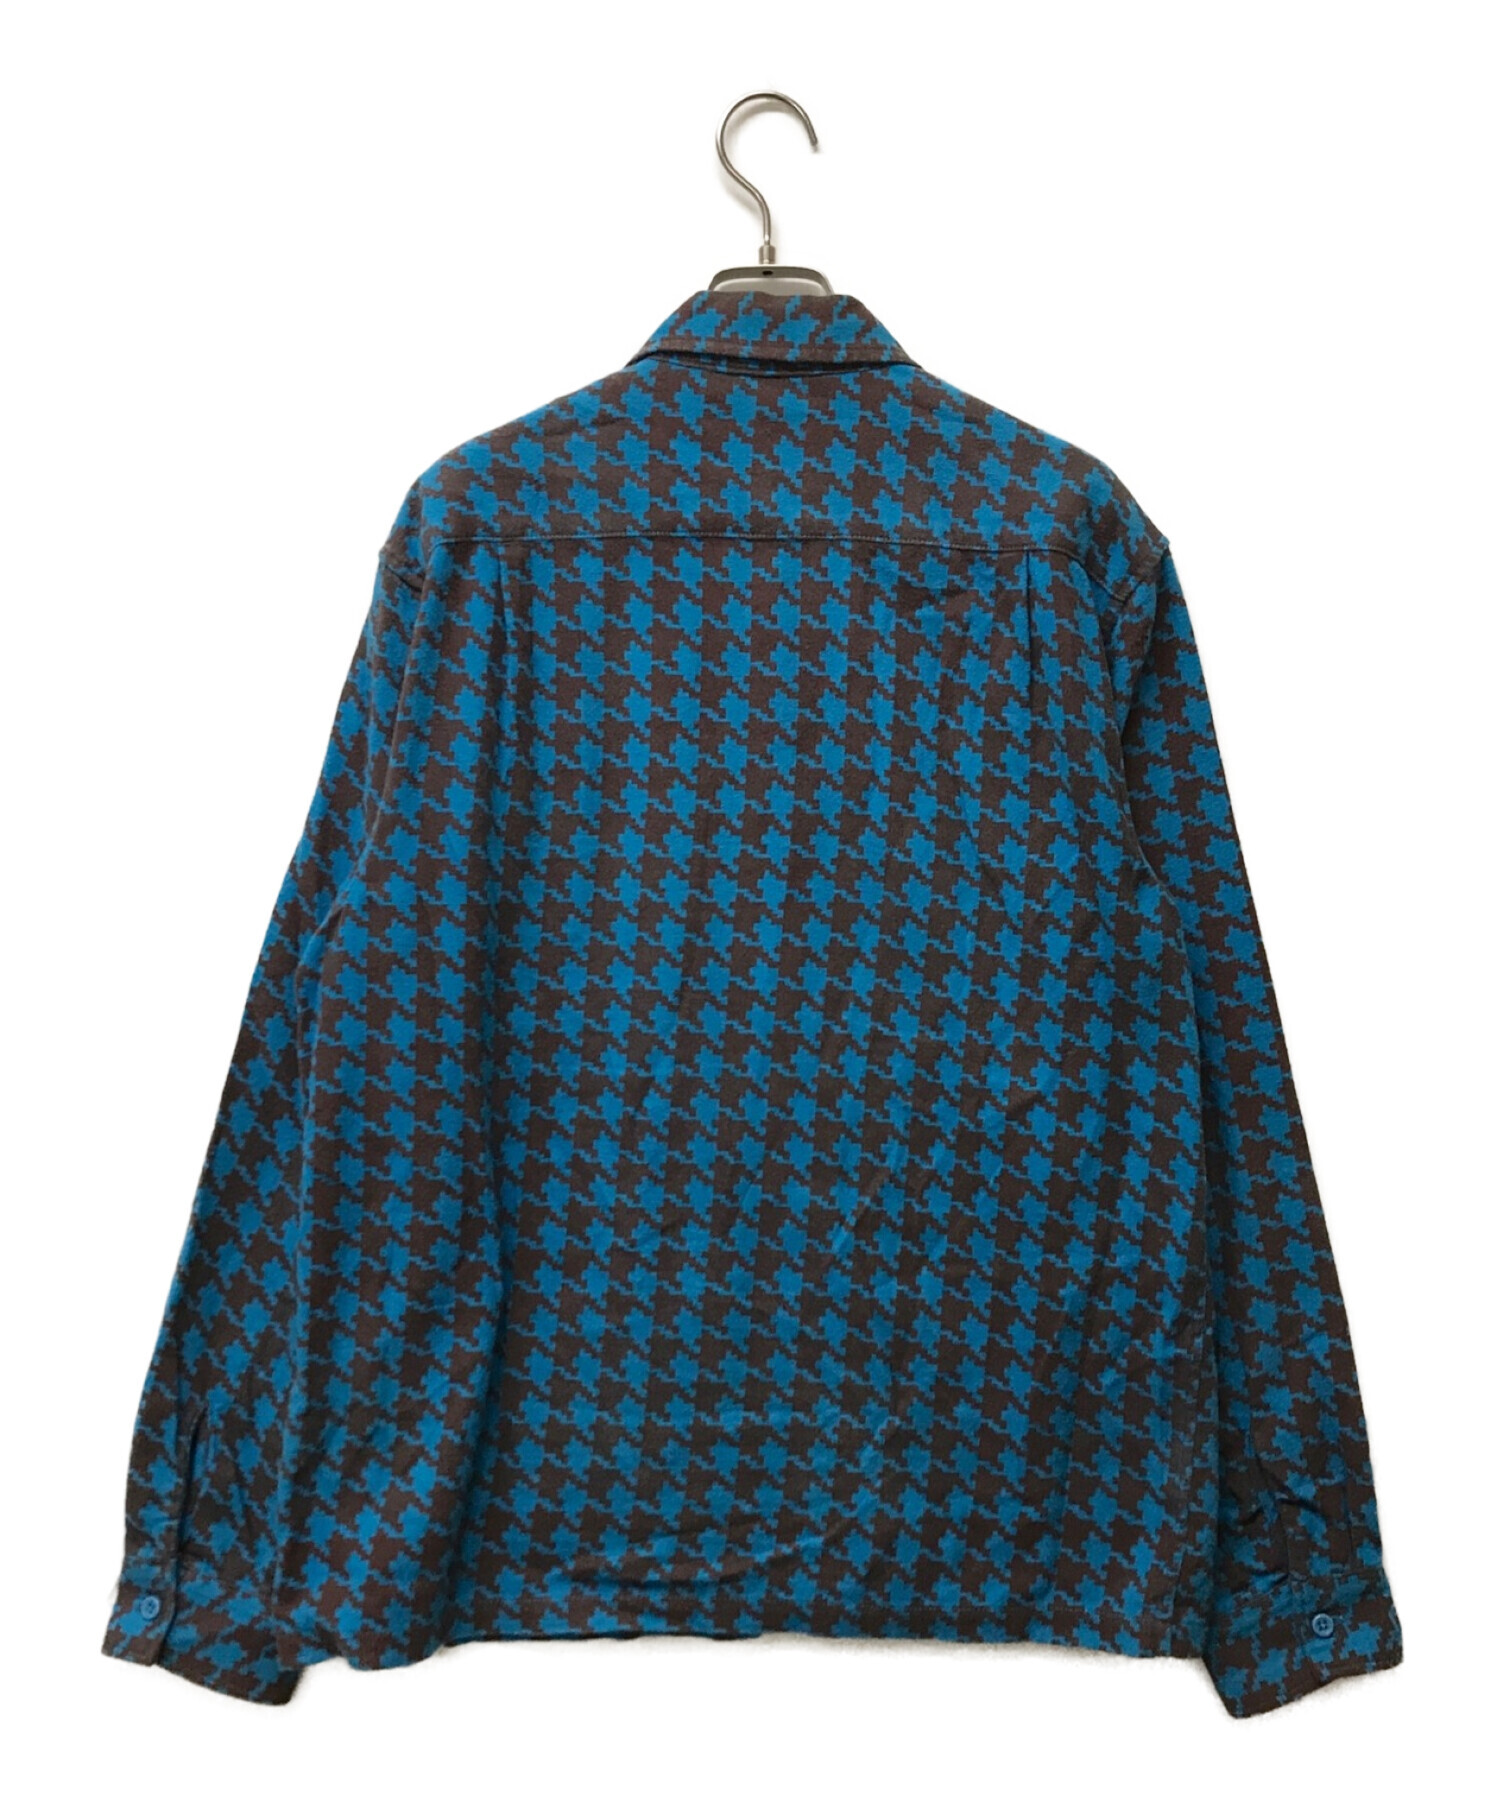 Supreme (シュプリーム) Houndstooth Flannel Zip Up Shirt グレー×ブルー サイズ:M